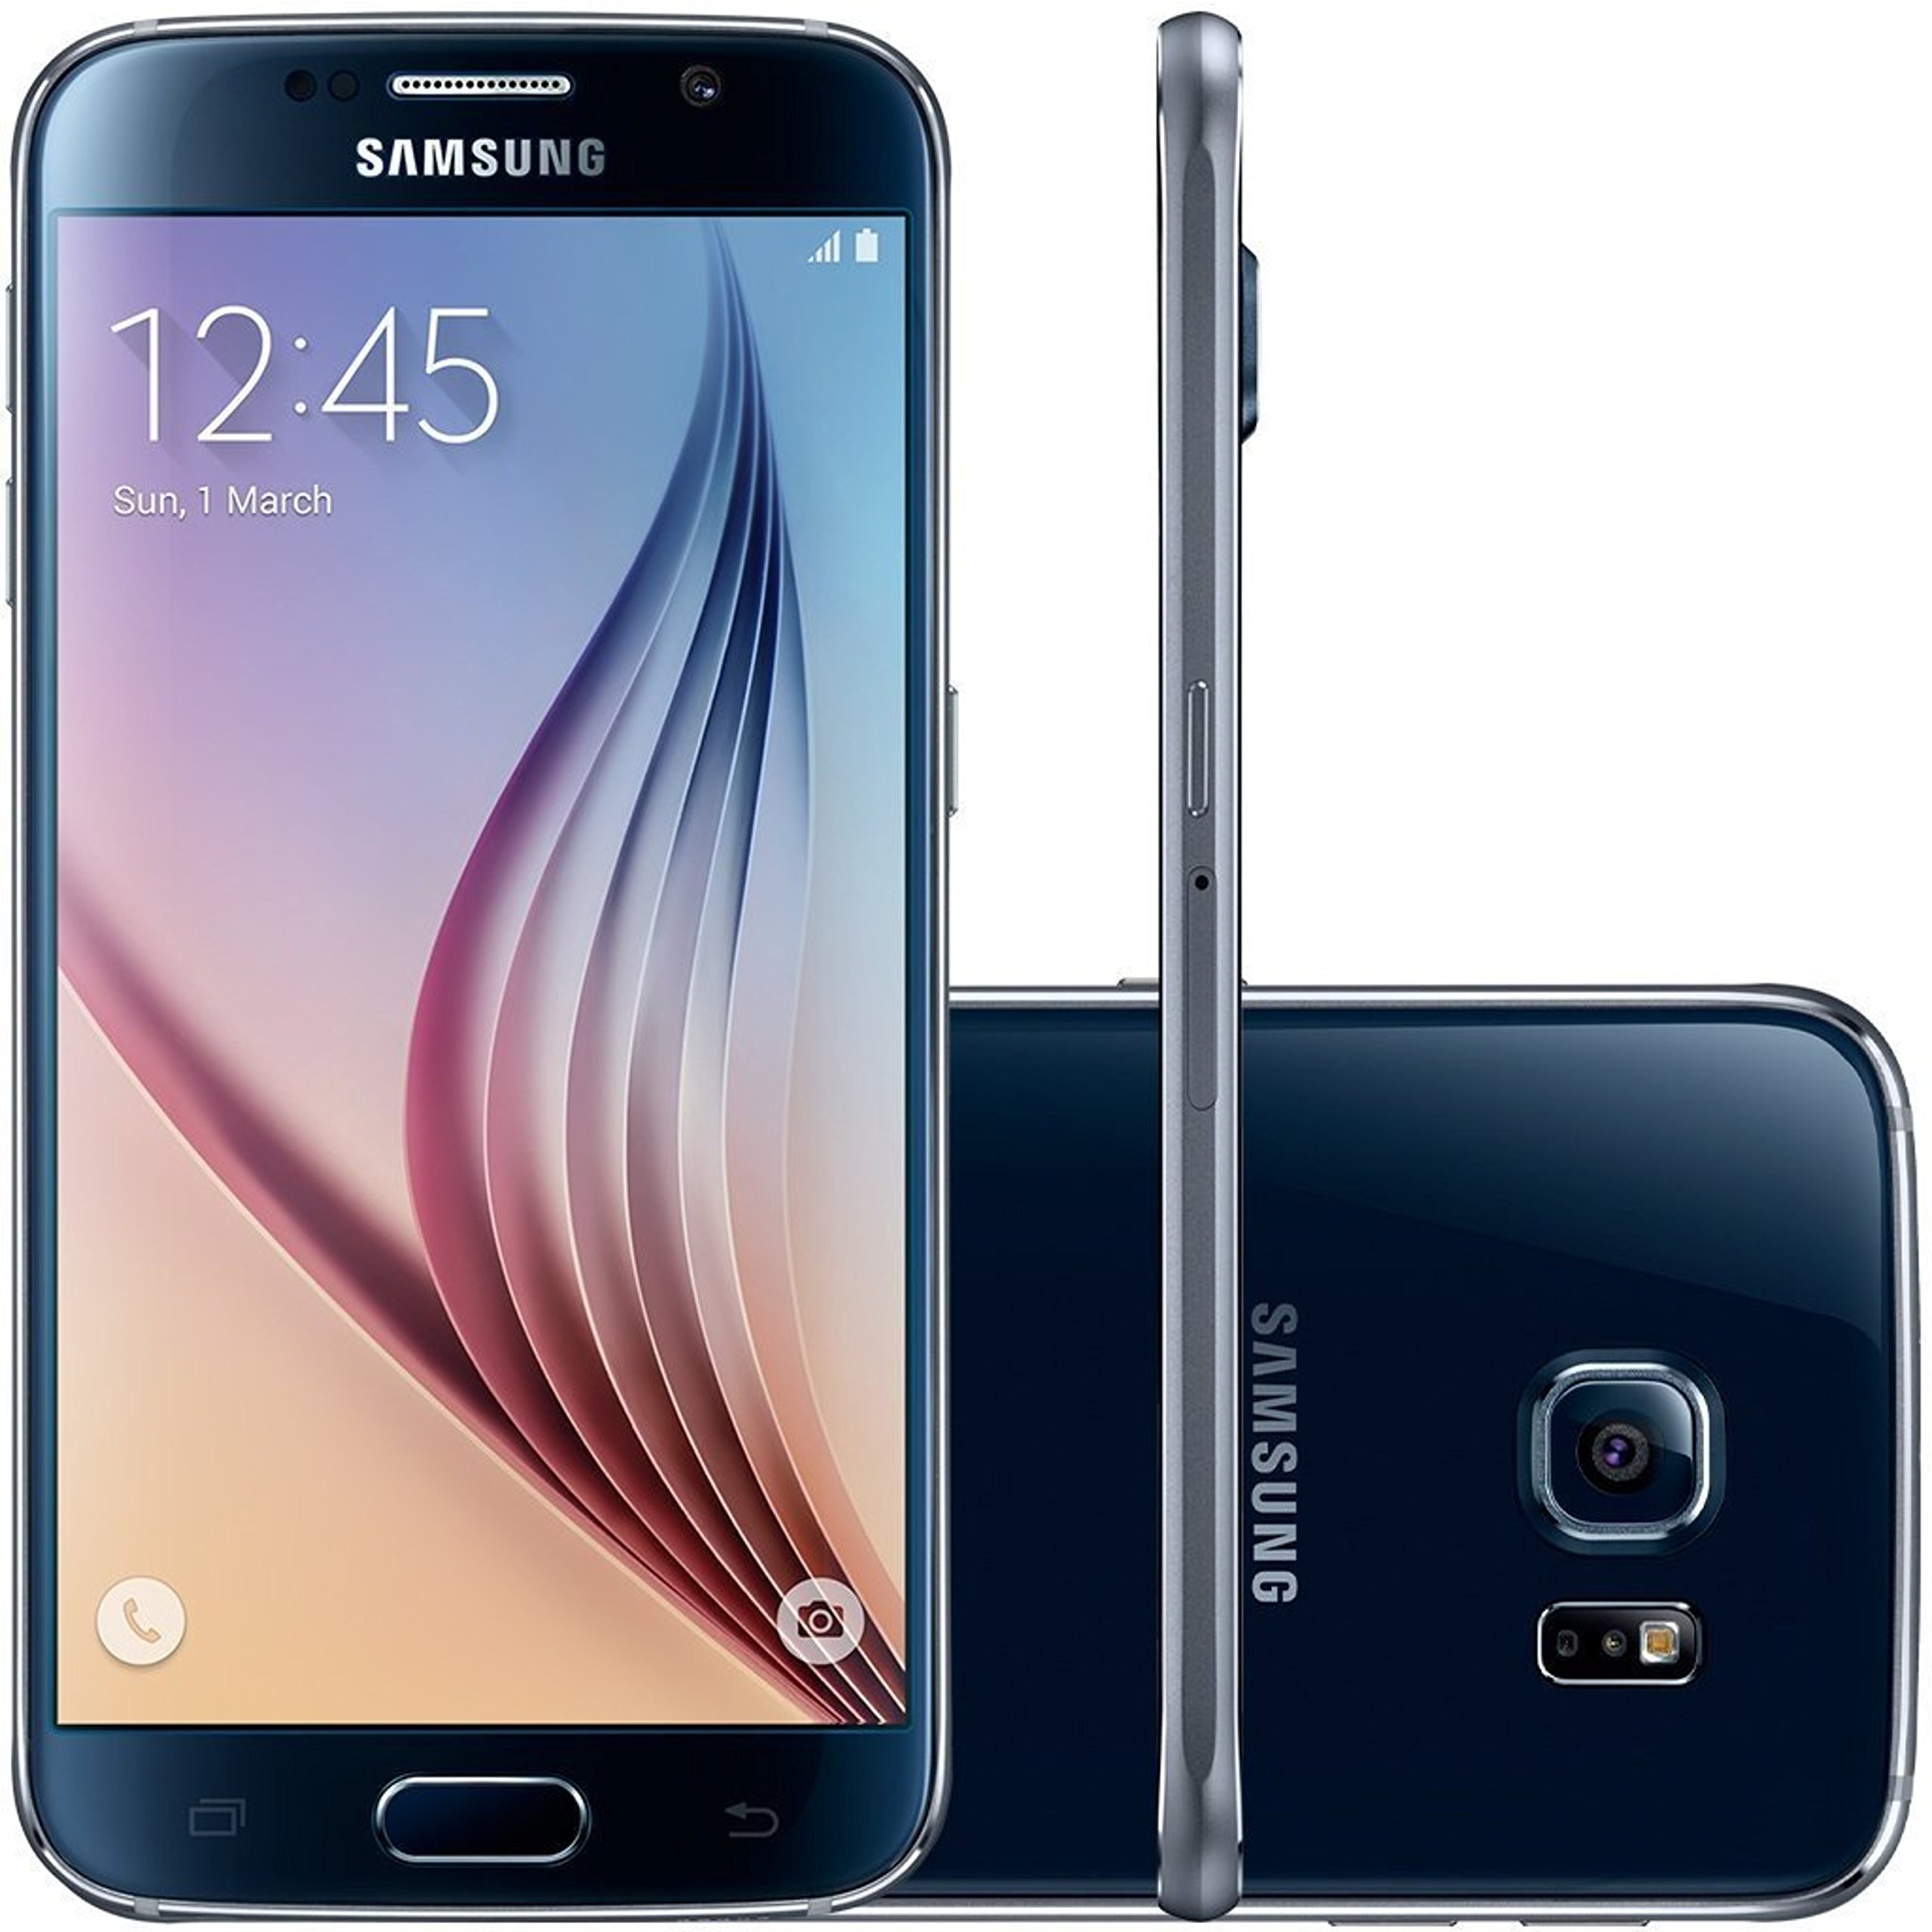 Samsung GALAXY S6 G920 32GB Unlocked GSM 4G LTE Octa-Core Smartphone - Black Sapphire